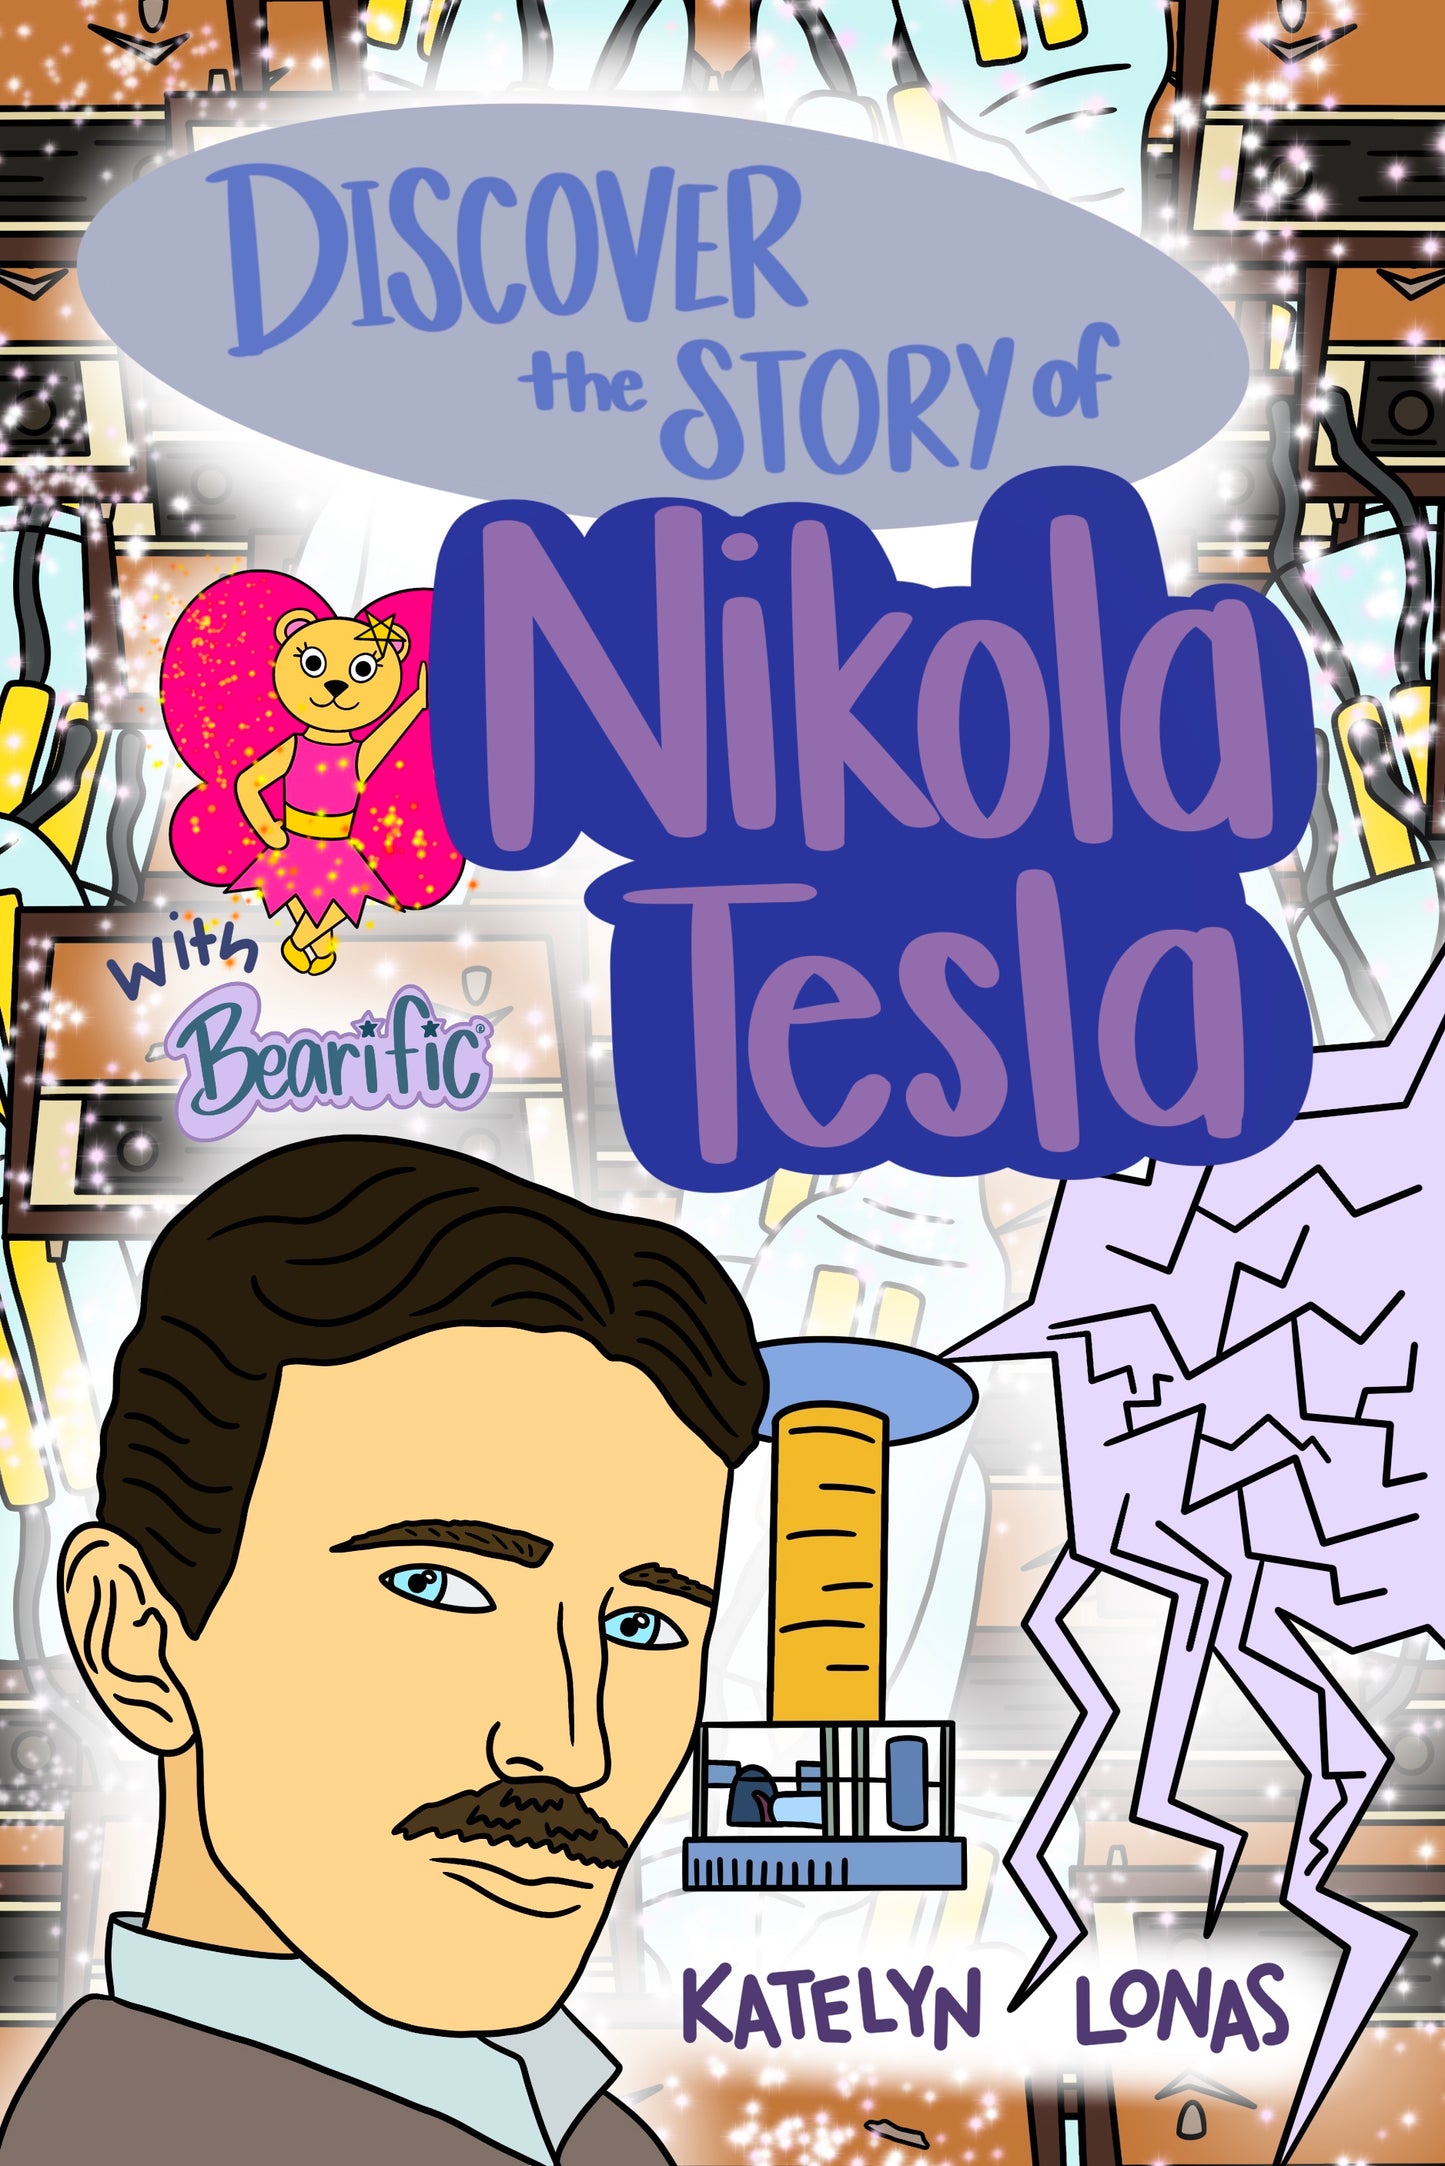 Discover The Story Of Nikola Tesla with Bearific